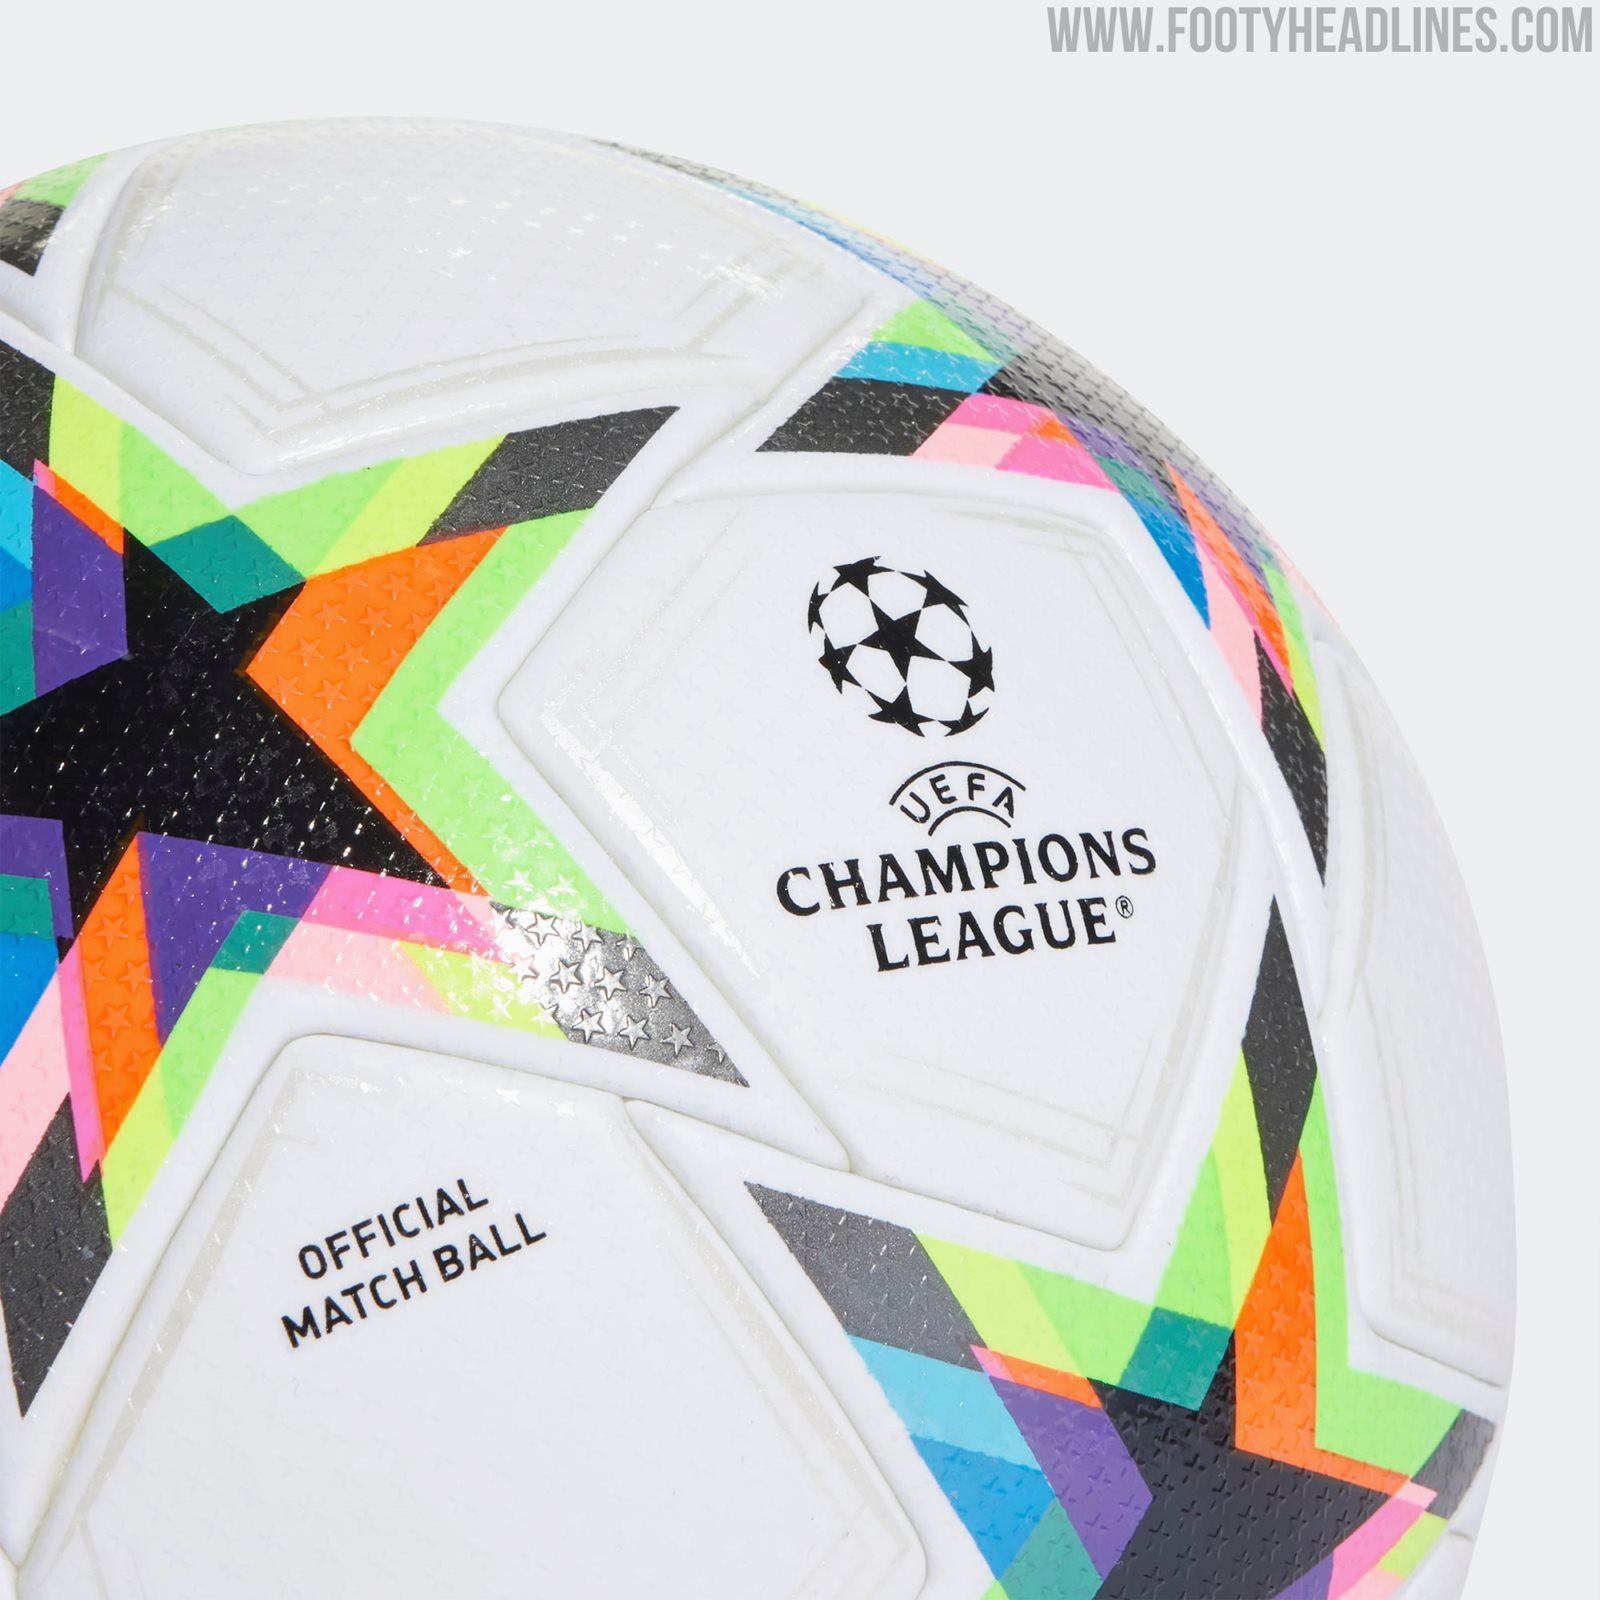 Adidas 2023 UEFA Champions League Final Ball Released - Footy Headlines